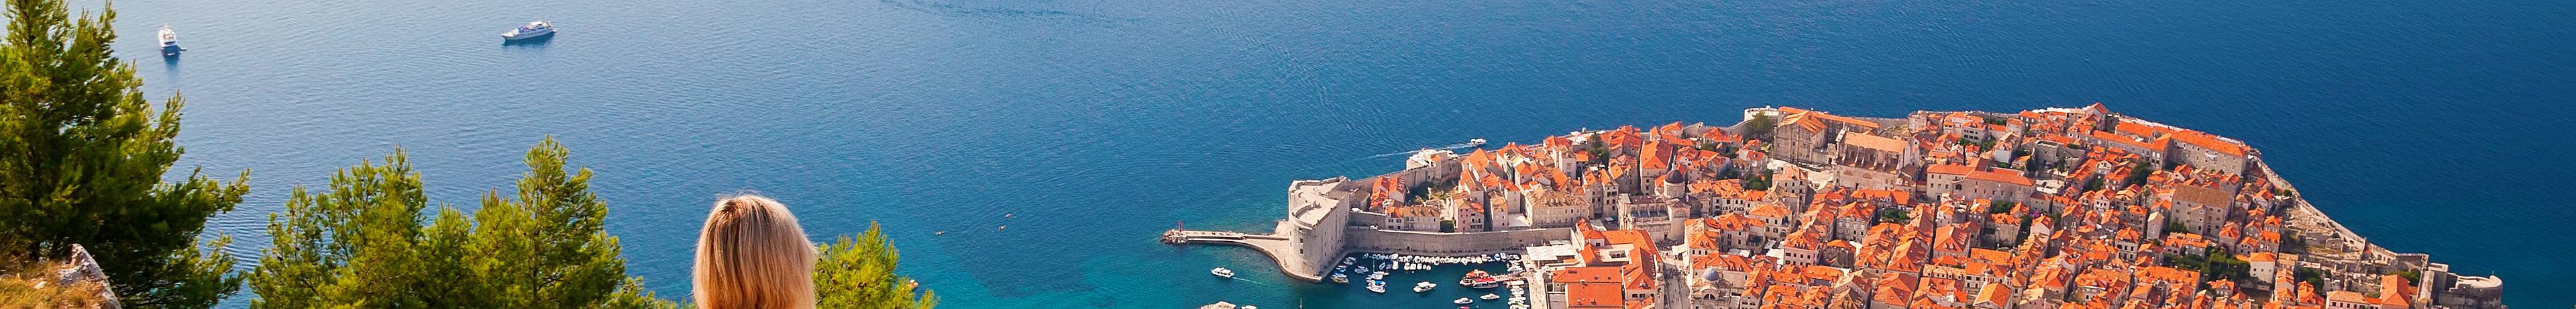 Los tres imprescindibles en familia: Split, Hvar y Dubrovnik